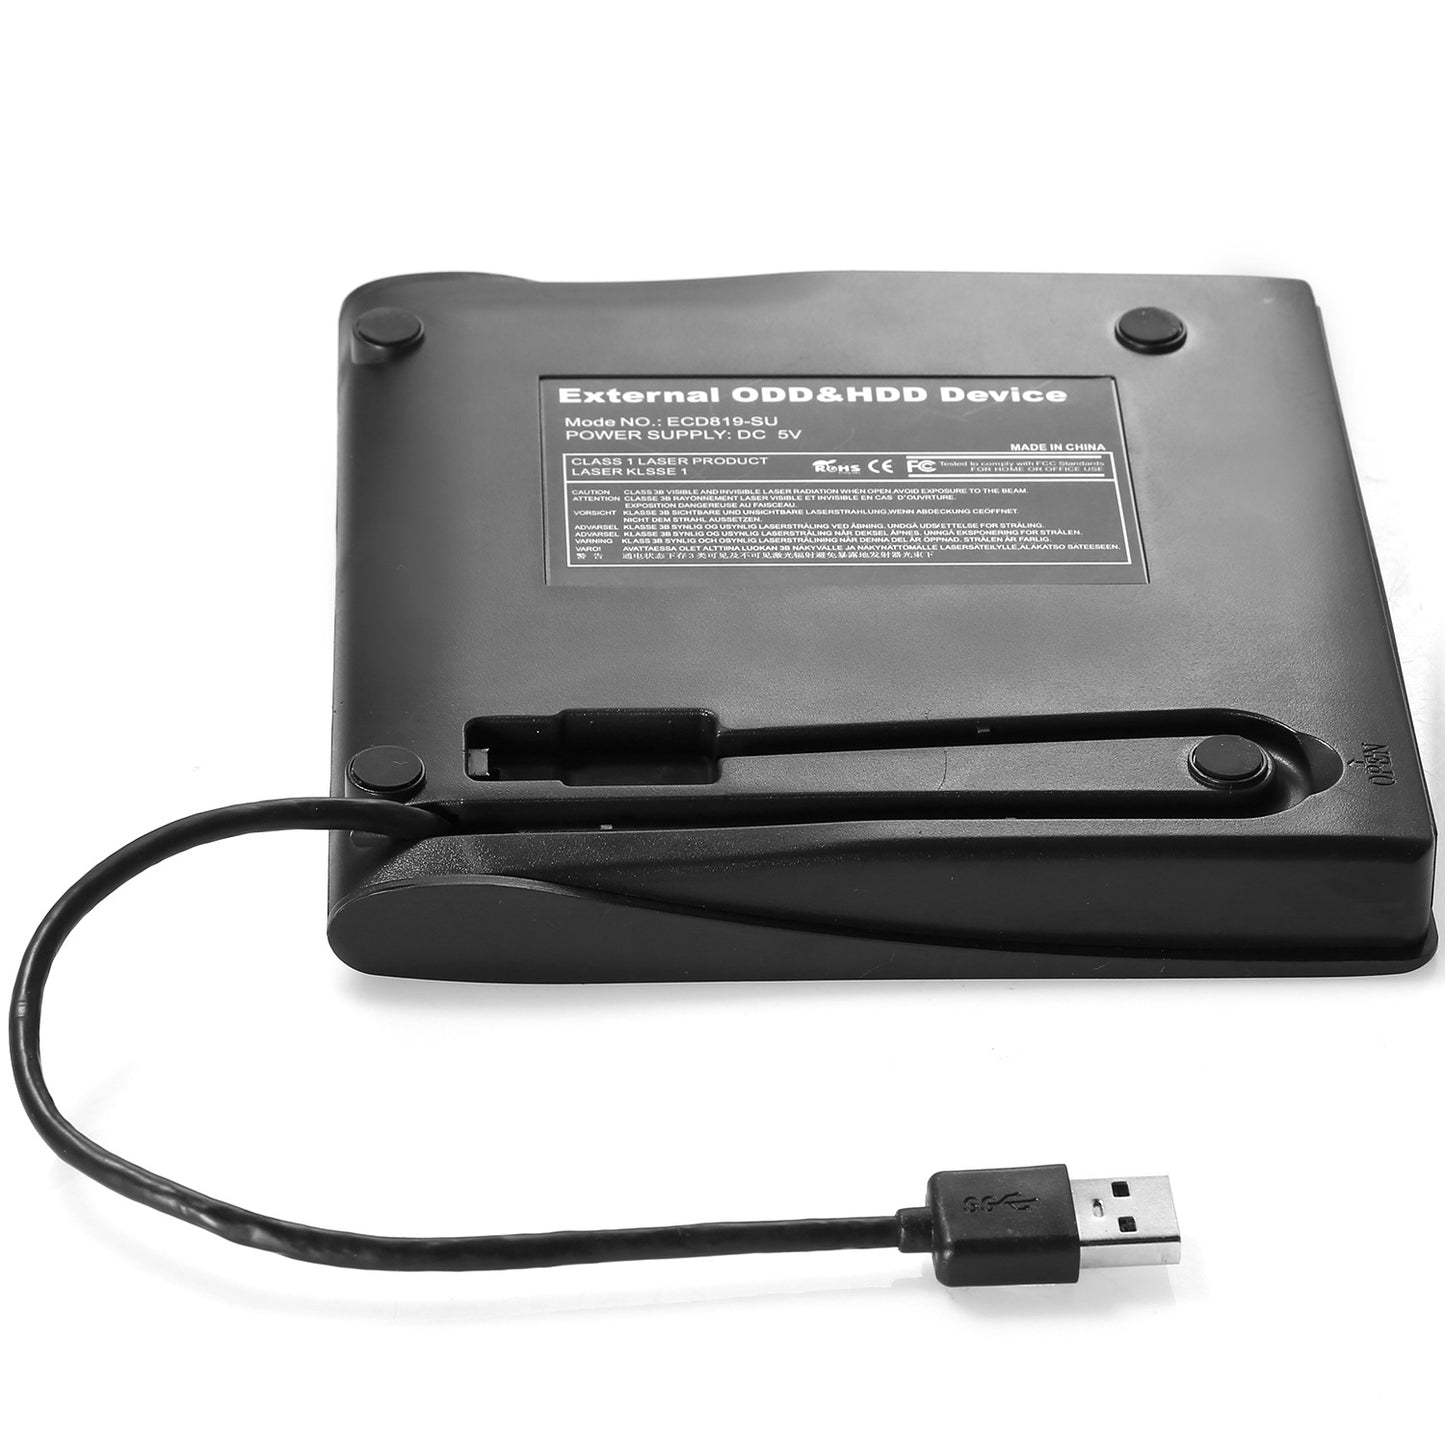 External CD DVD Drive USB 3.0 Slim DVD-RW Drive Superdrive Burner Writer High Speed Data Transfer USB Optical Drives Players